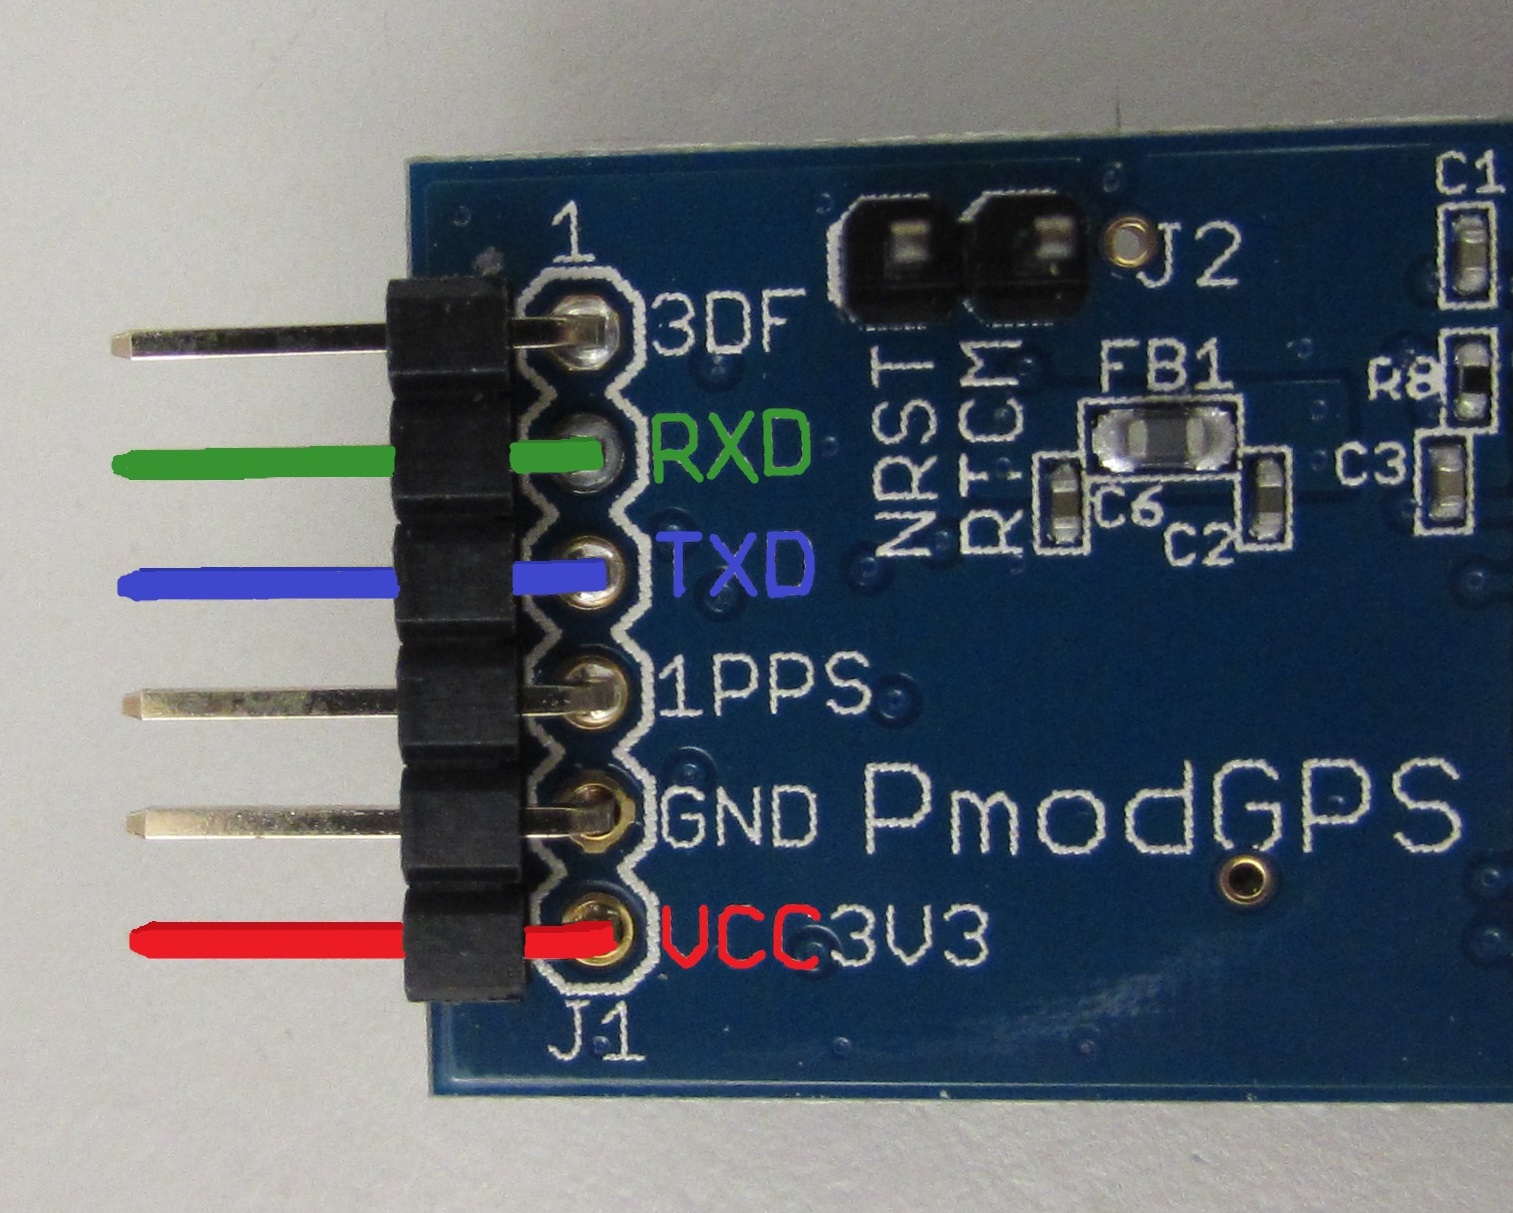 Digilent's 2 wire (receive and transmit) UART Pmod GPS